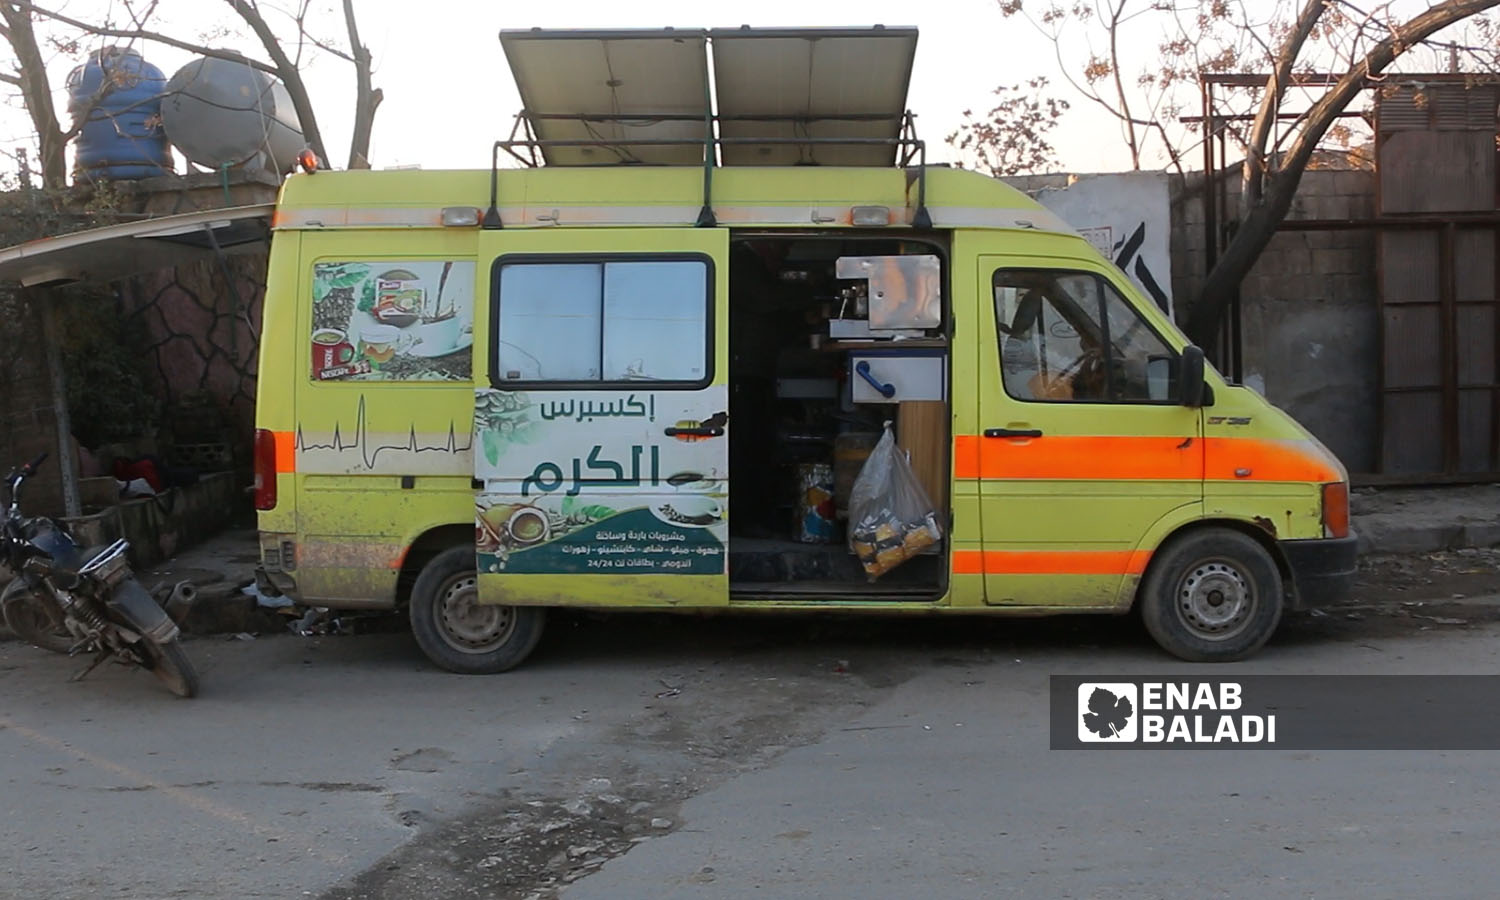 A car selling drinks and juices in Idlib - January 27, 2023 (Enab Baladi/Anas al-Khouli)